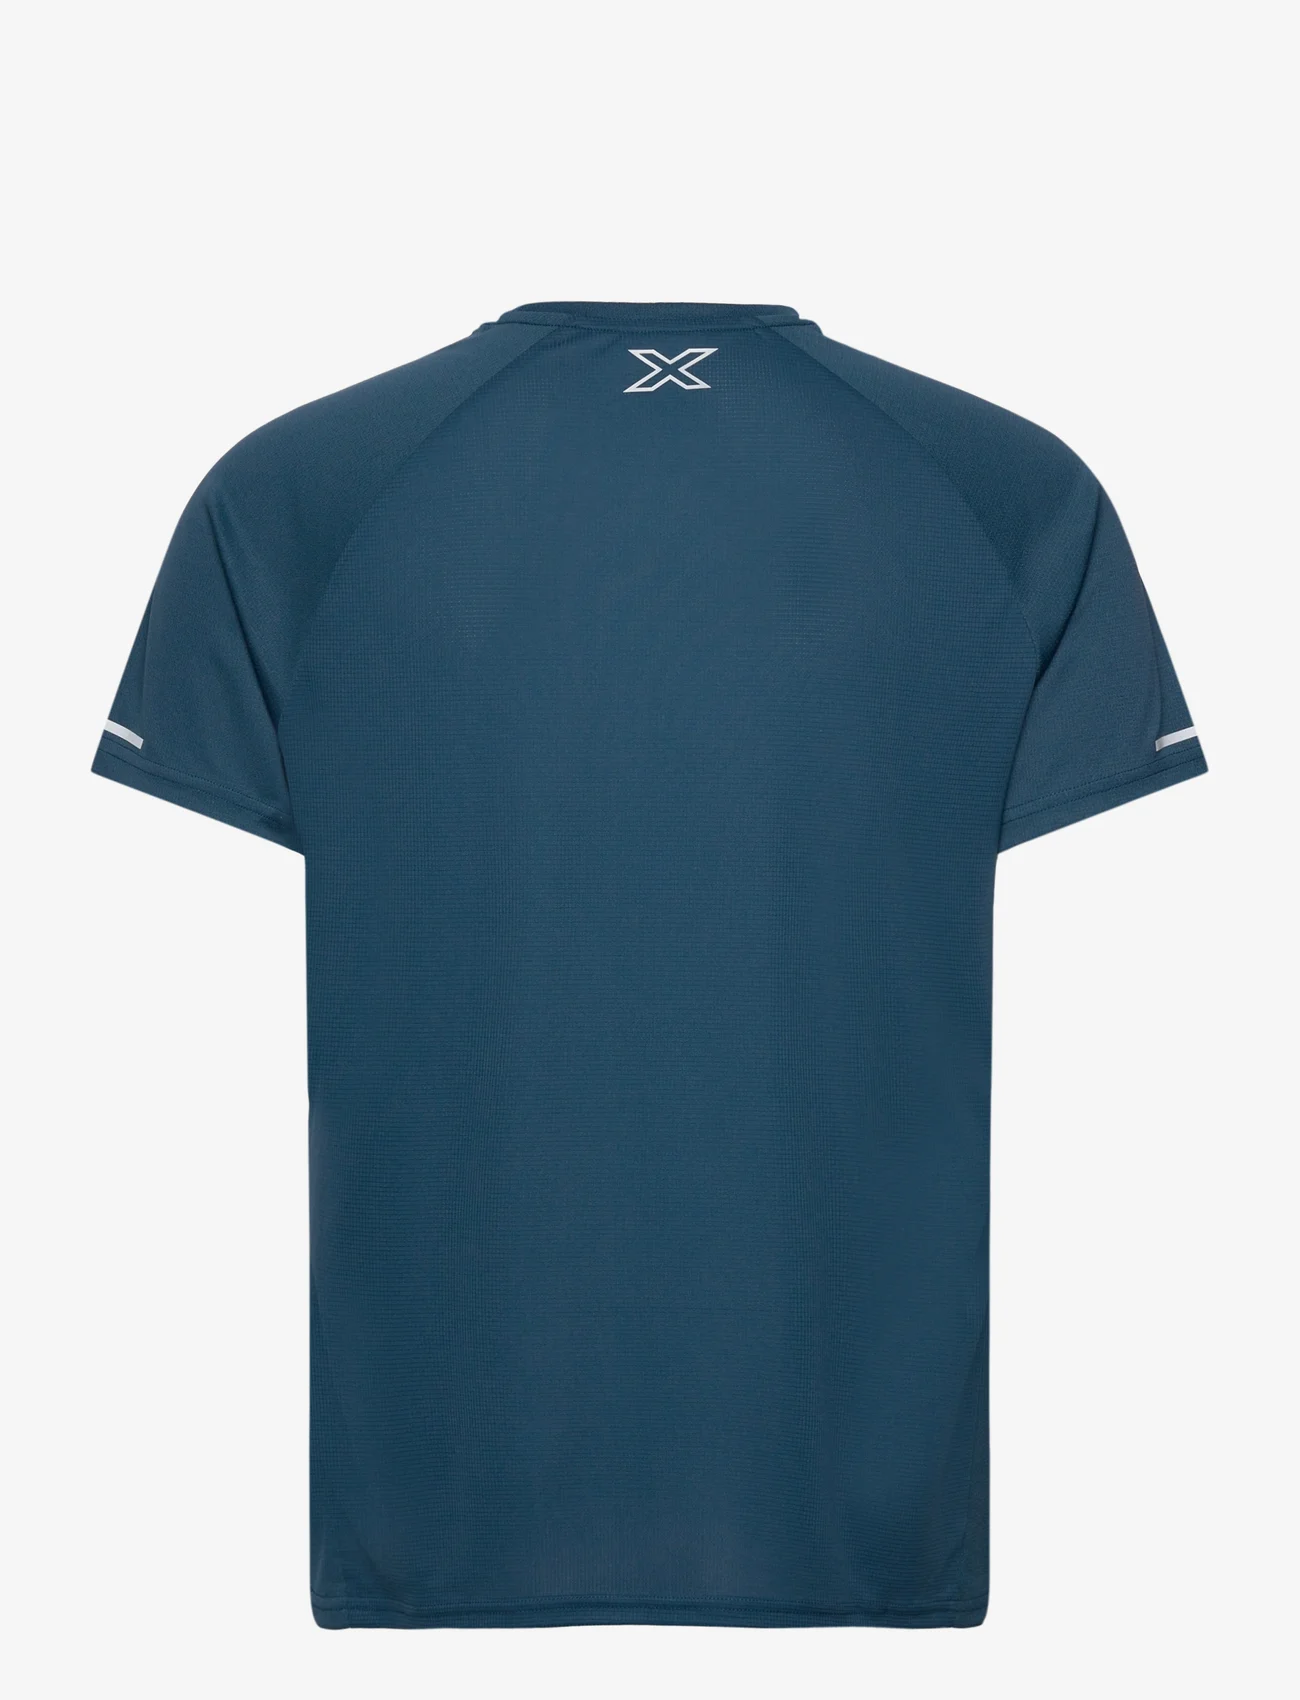 2XU - AERO TEE - short-sleeved t-shirts - majol/silver reflective - 1